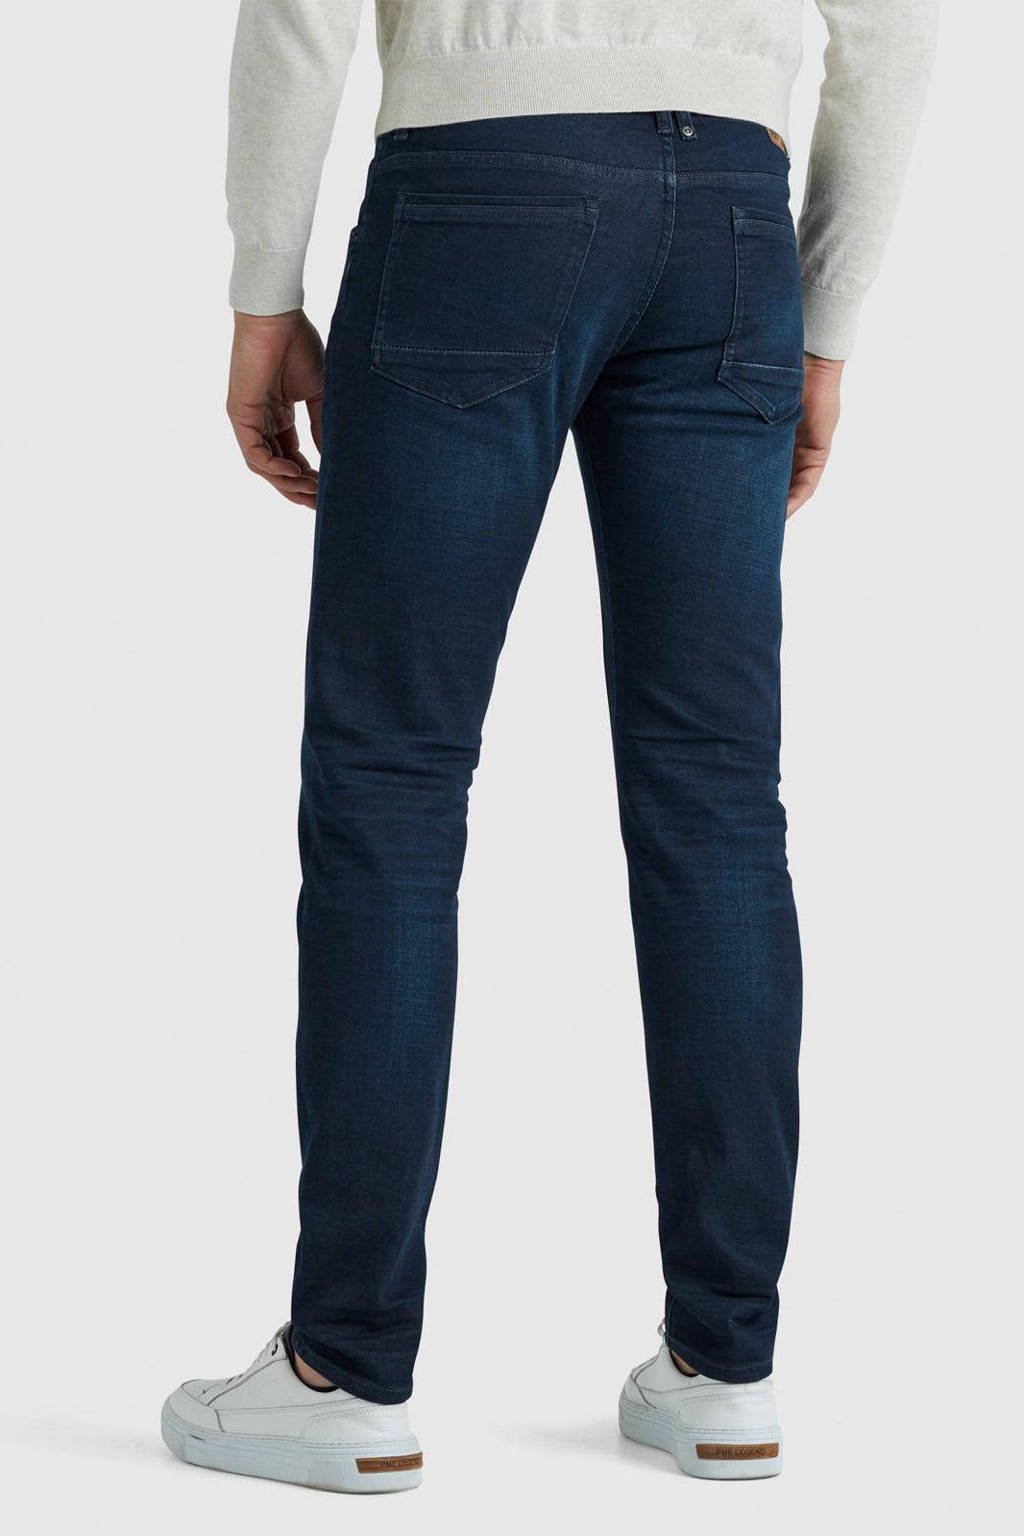 | wehkamp PME slim jeans dds fit Legend Tailwheel